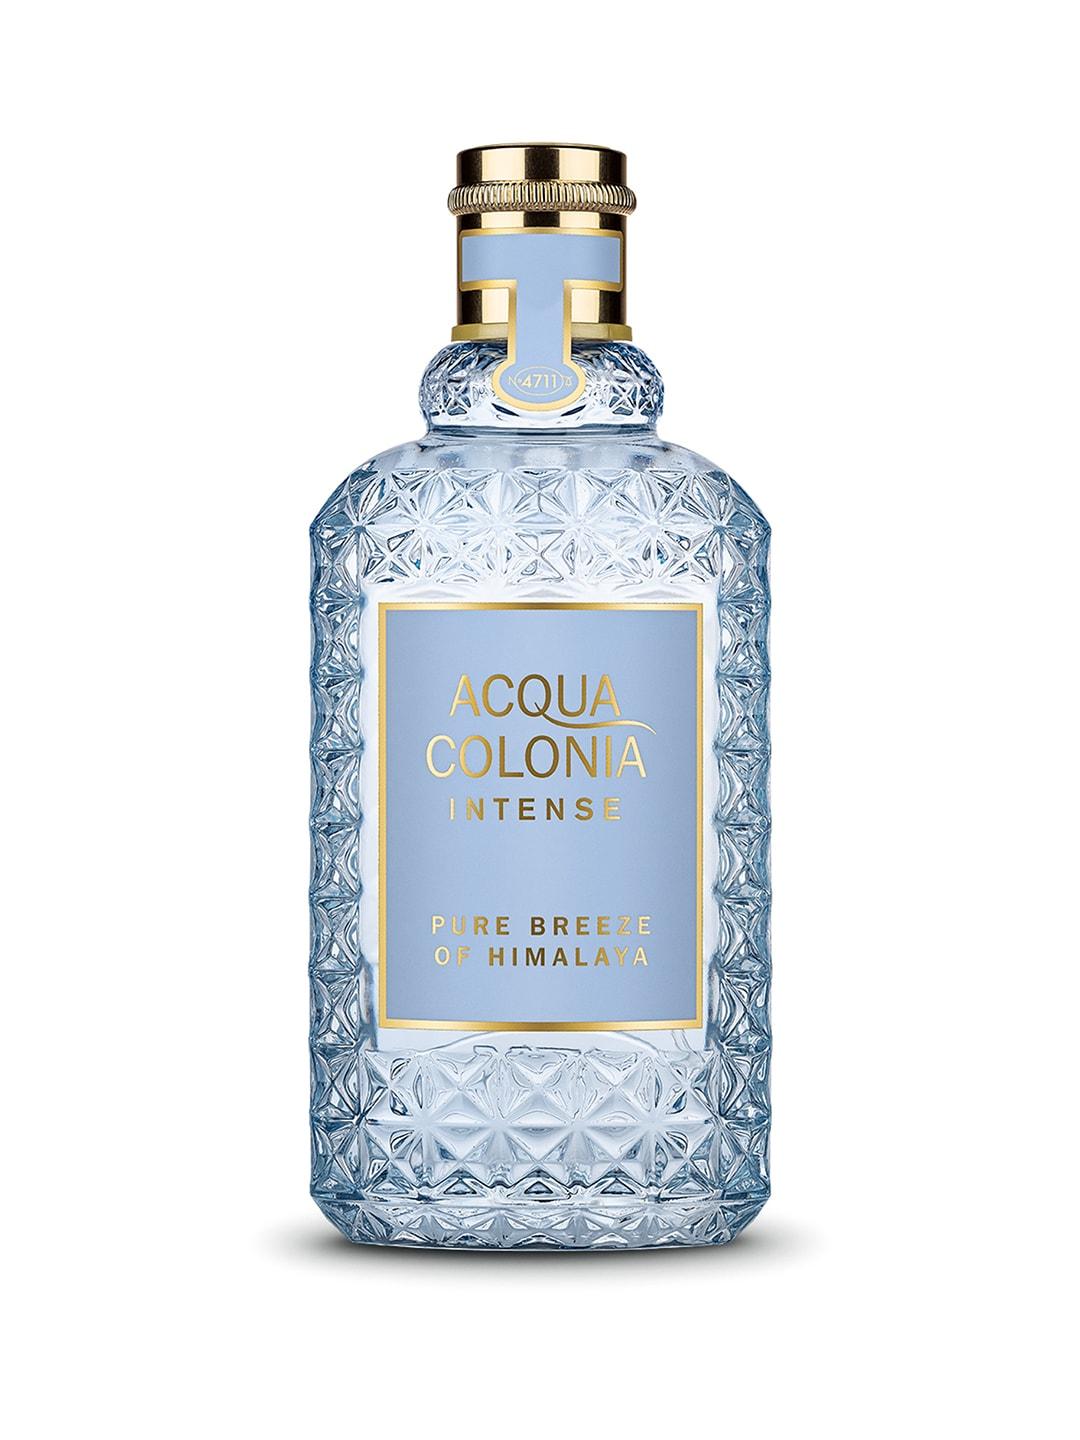 4711 Acqua Colonia Pure Breeze Of Himalaya Eau De Cologne - 170 ml